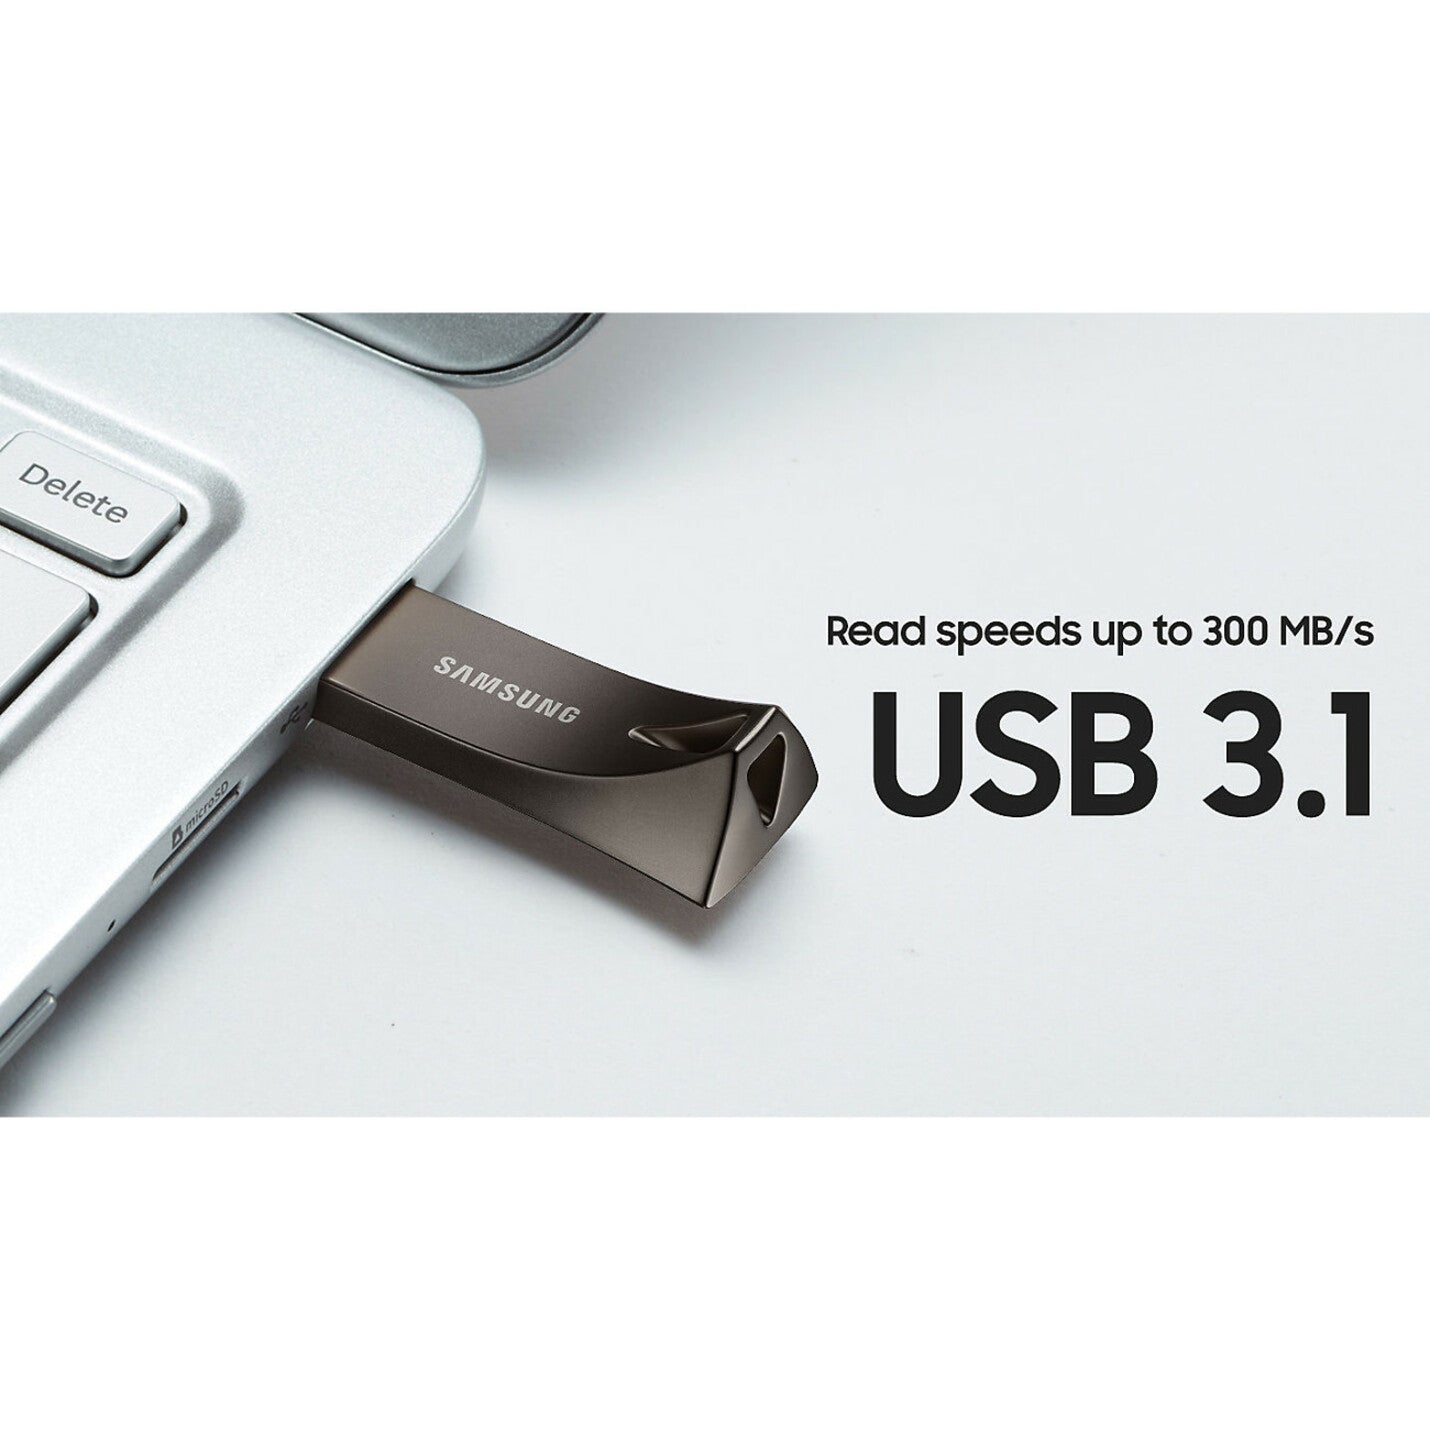 Samsung MUF-128BE4/AM USB 3.1 Flash Drive Bar Plus 128GB Titan Gray, 5 Year Warranty